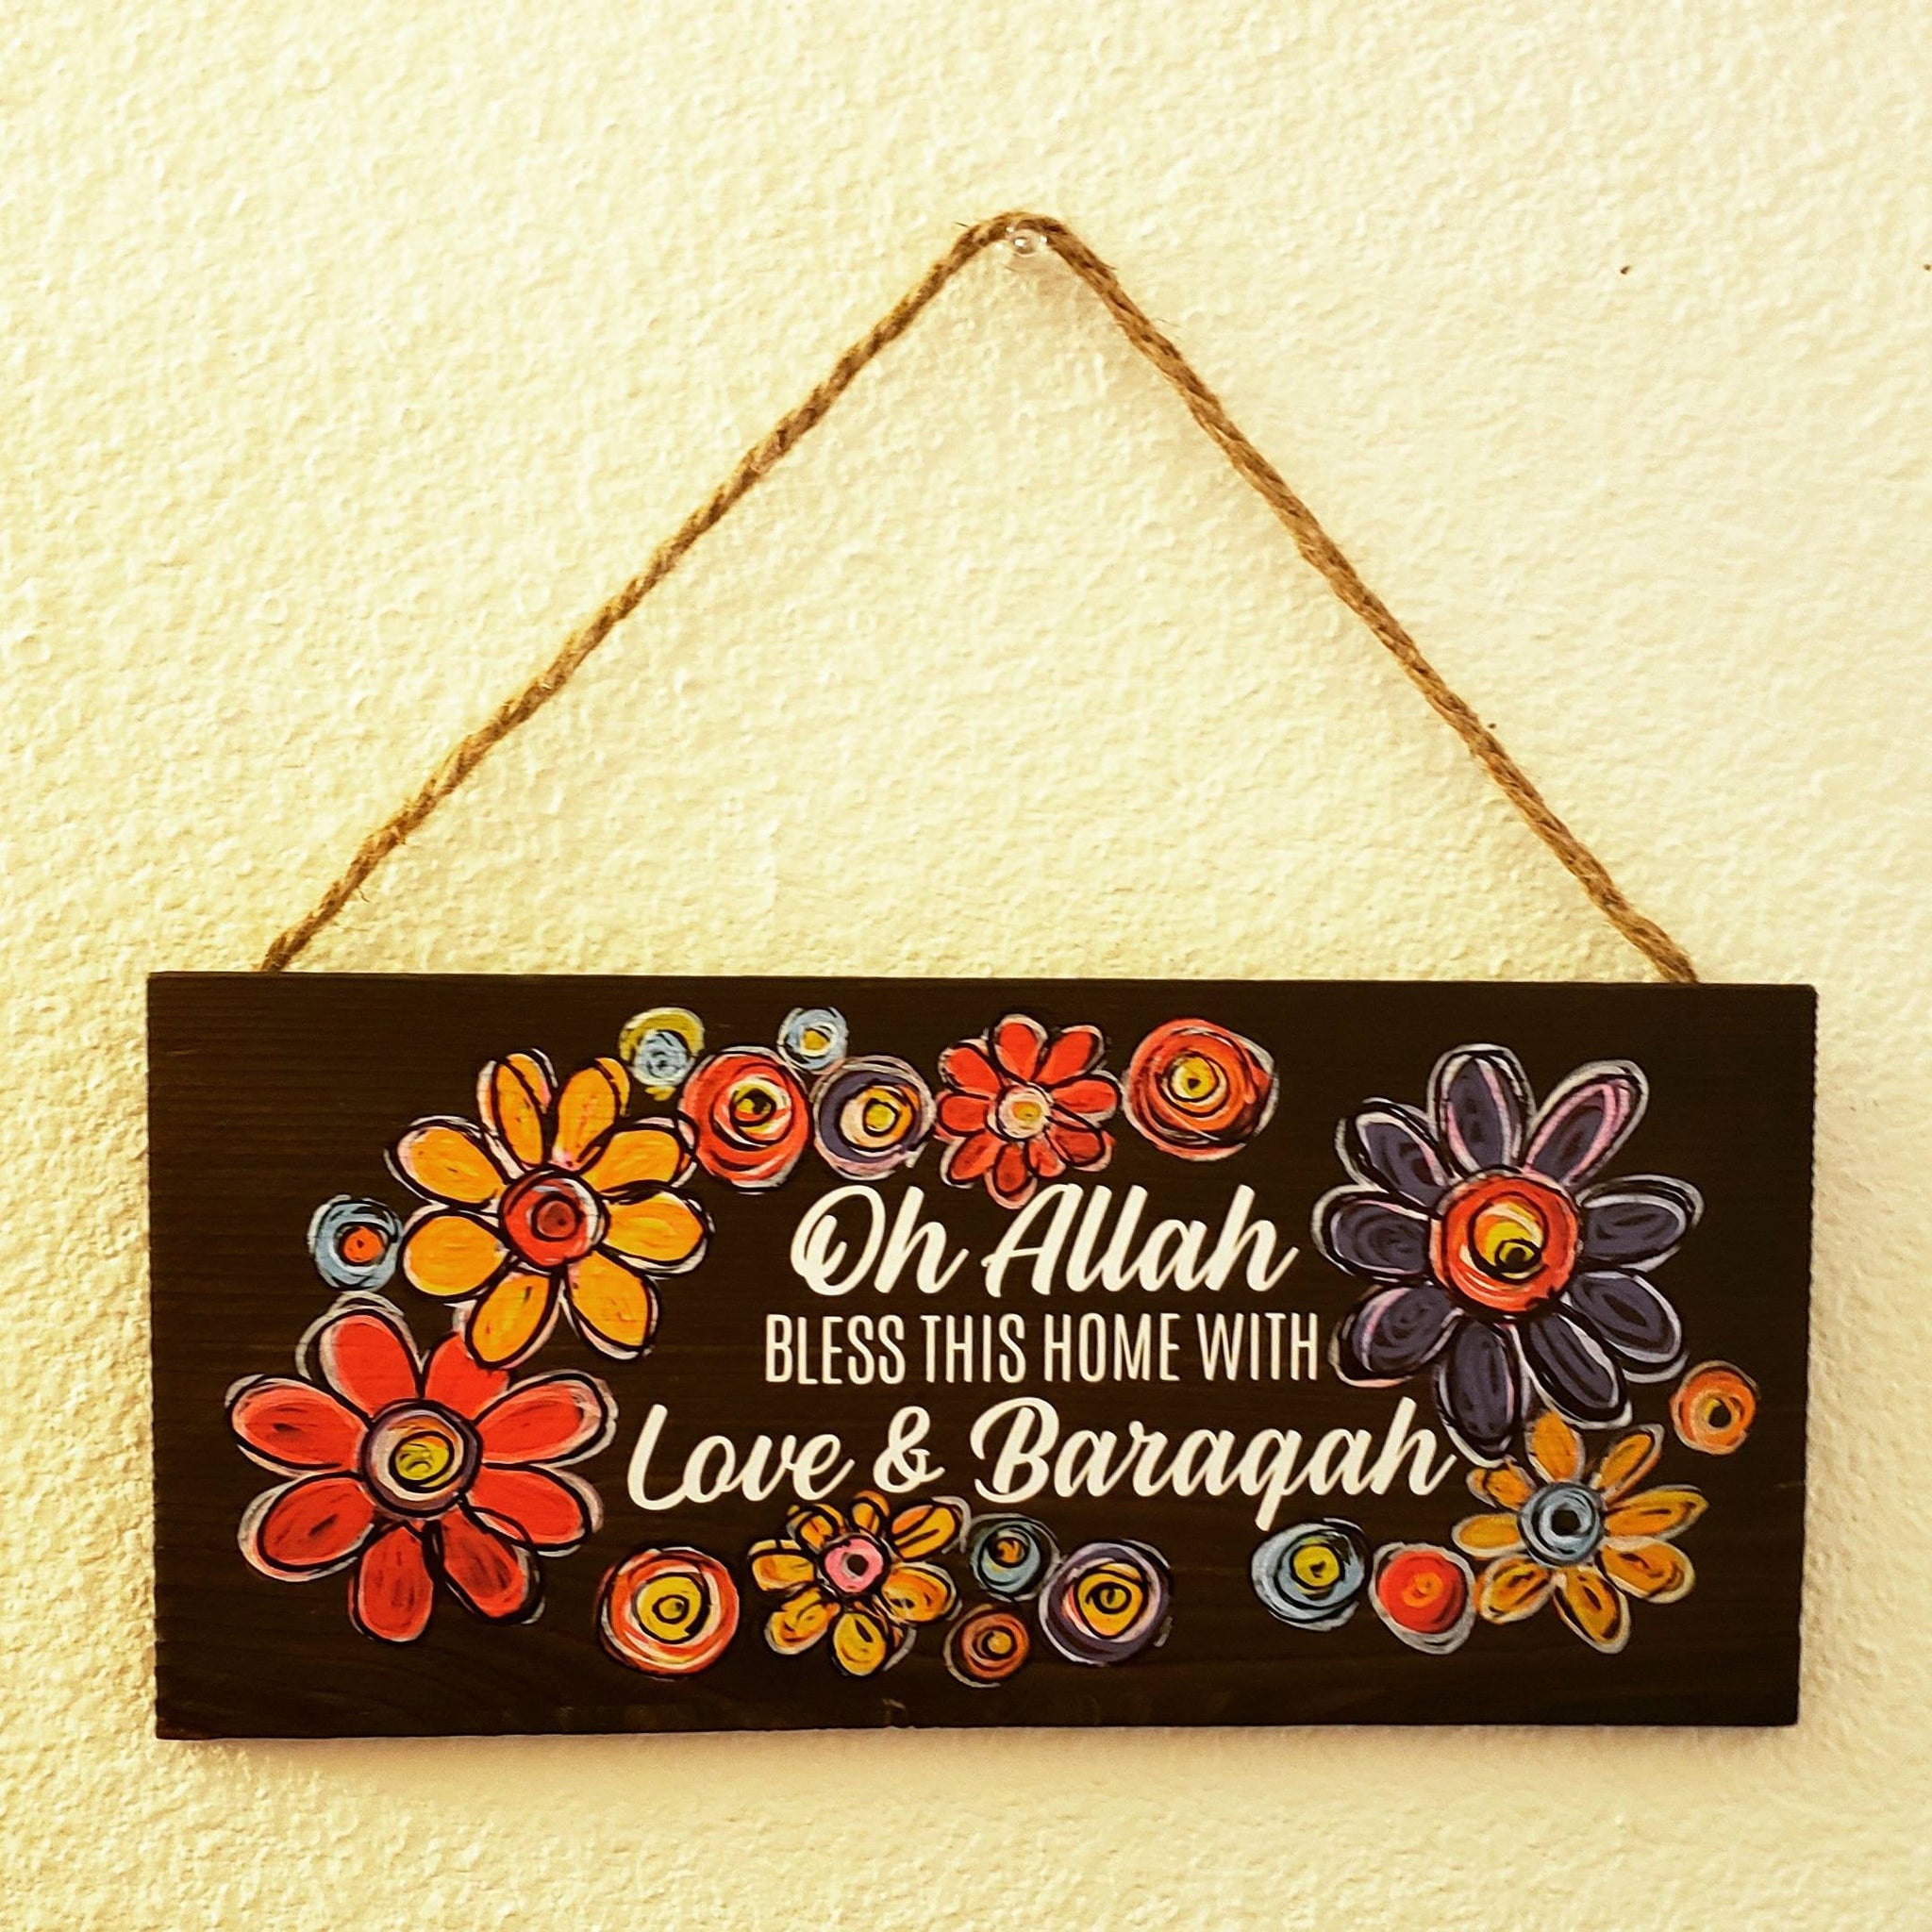 Islamic plauqe - dua flowers hand painted plaques, islamic gift, islamic sign - Islamic enty way decor sign - Islamic gift.